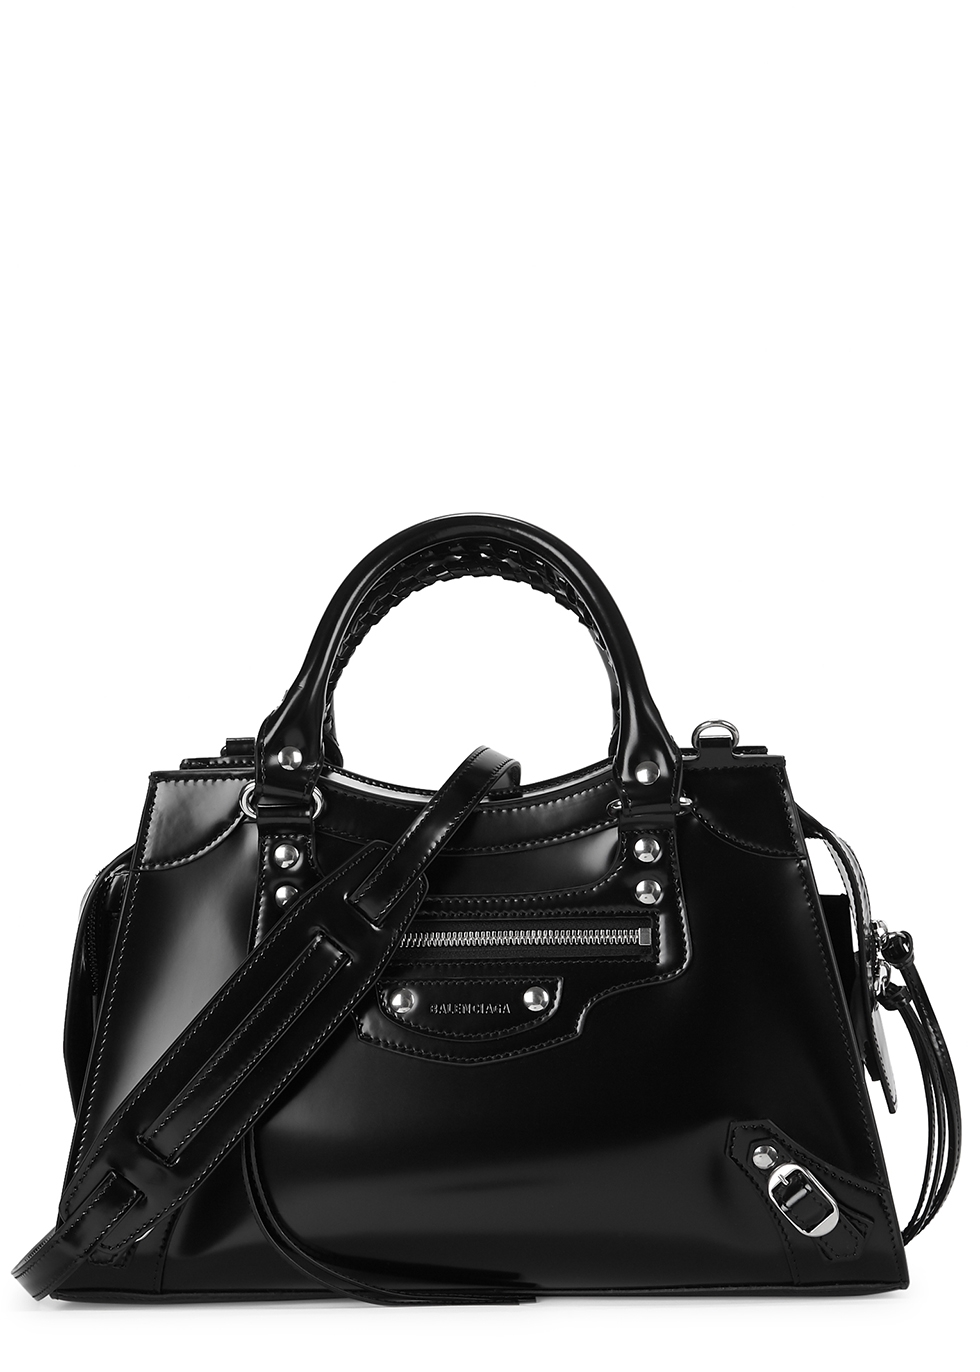 Balenciaga Classic City small black leather top handle bag - Harvey Nichols